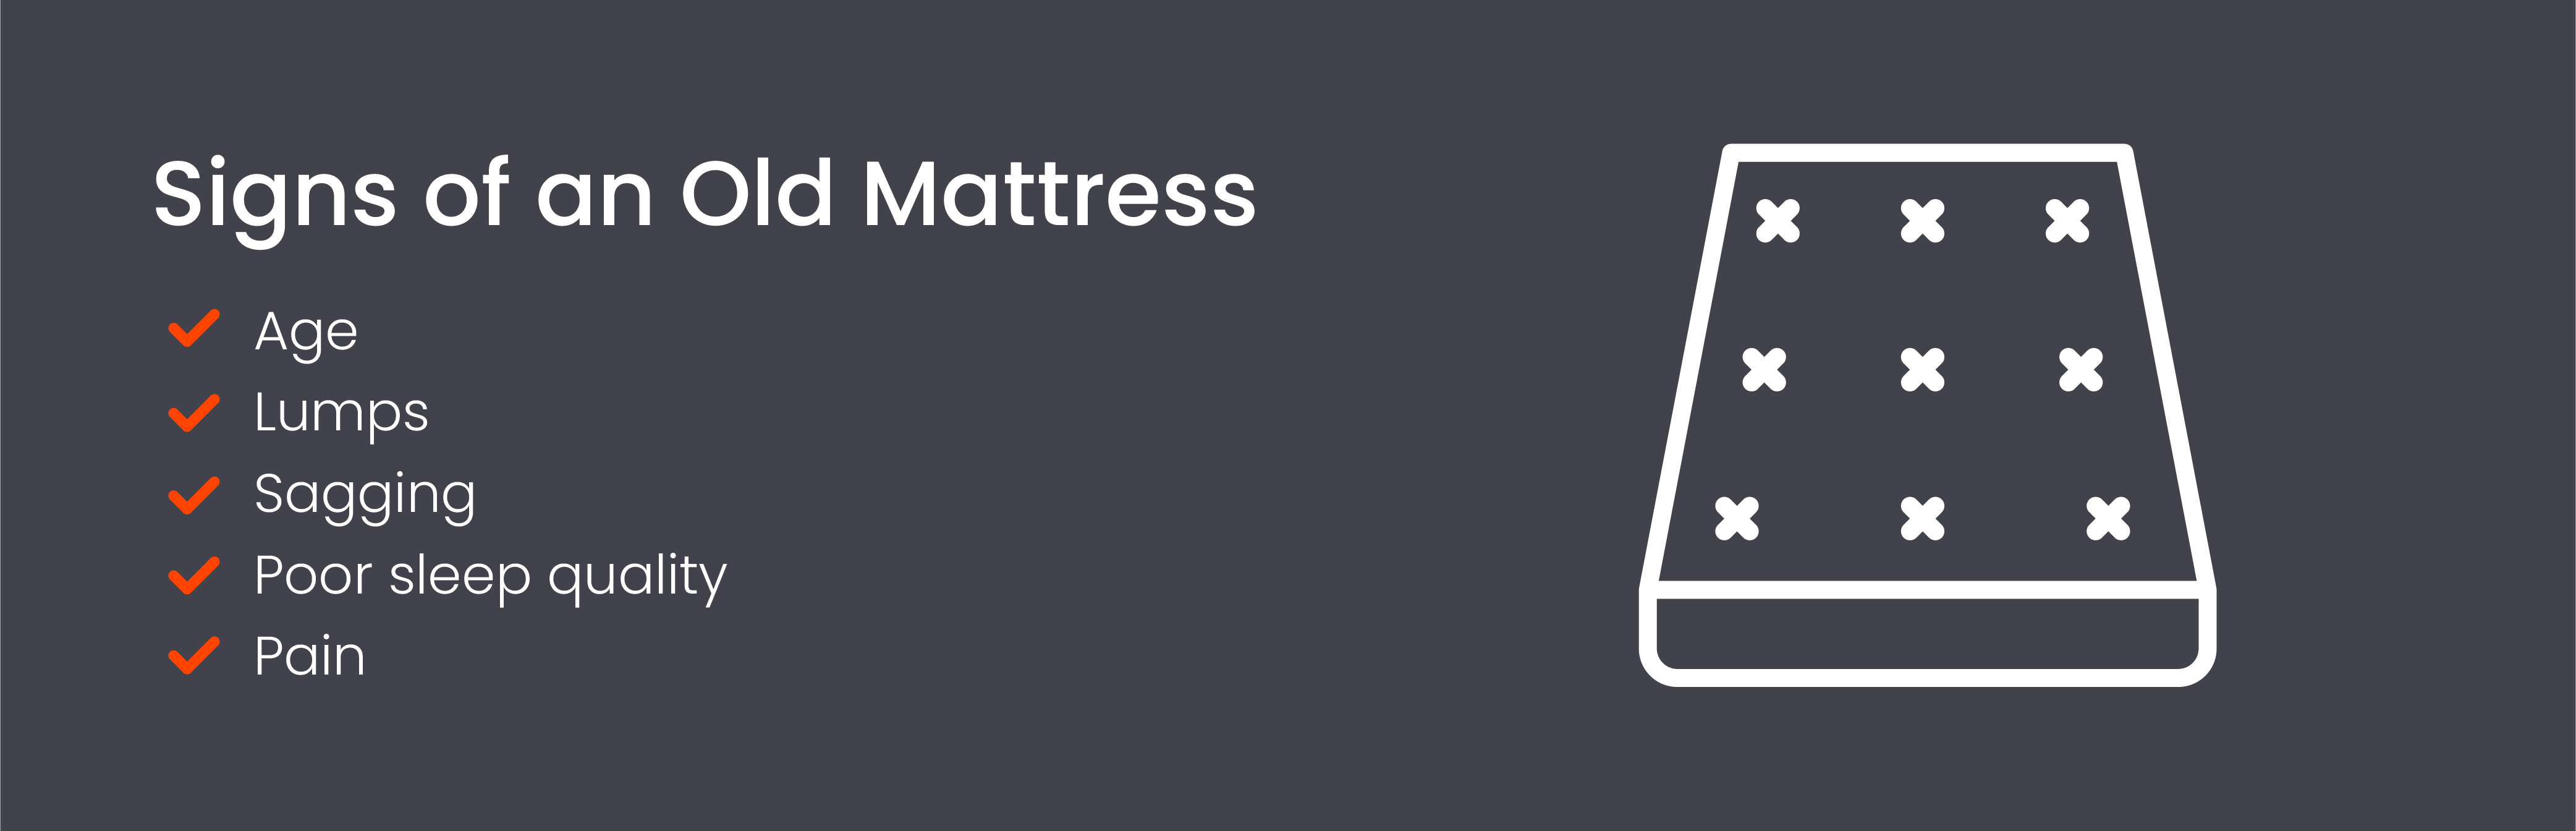 Signs of an old mattress